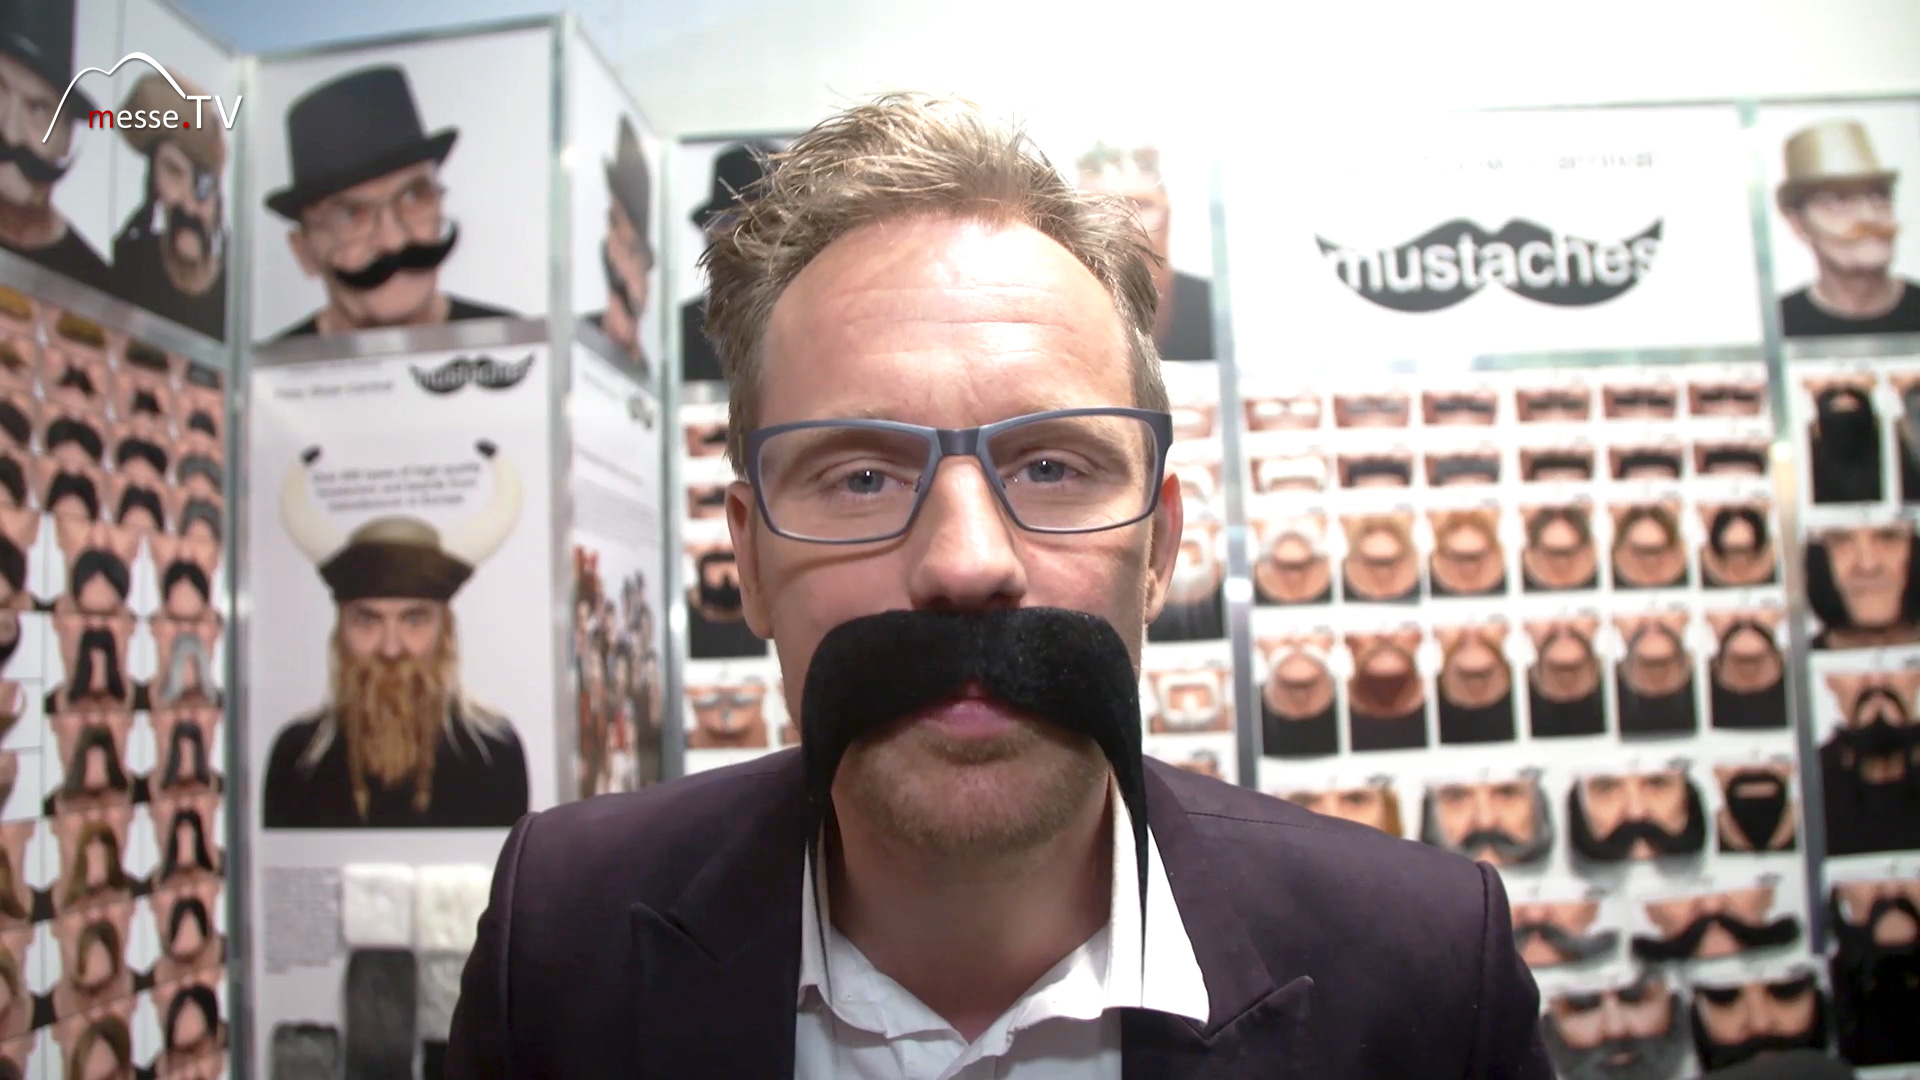 Mustache false beard toy fair 2018 Nuremberg